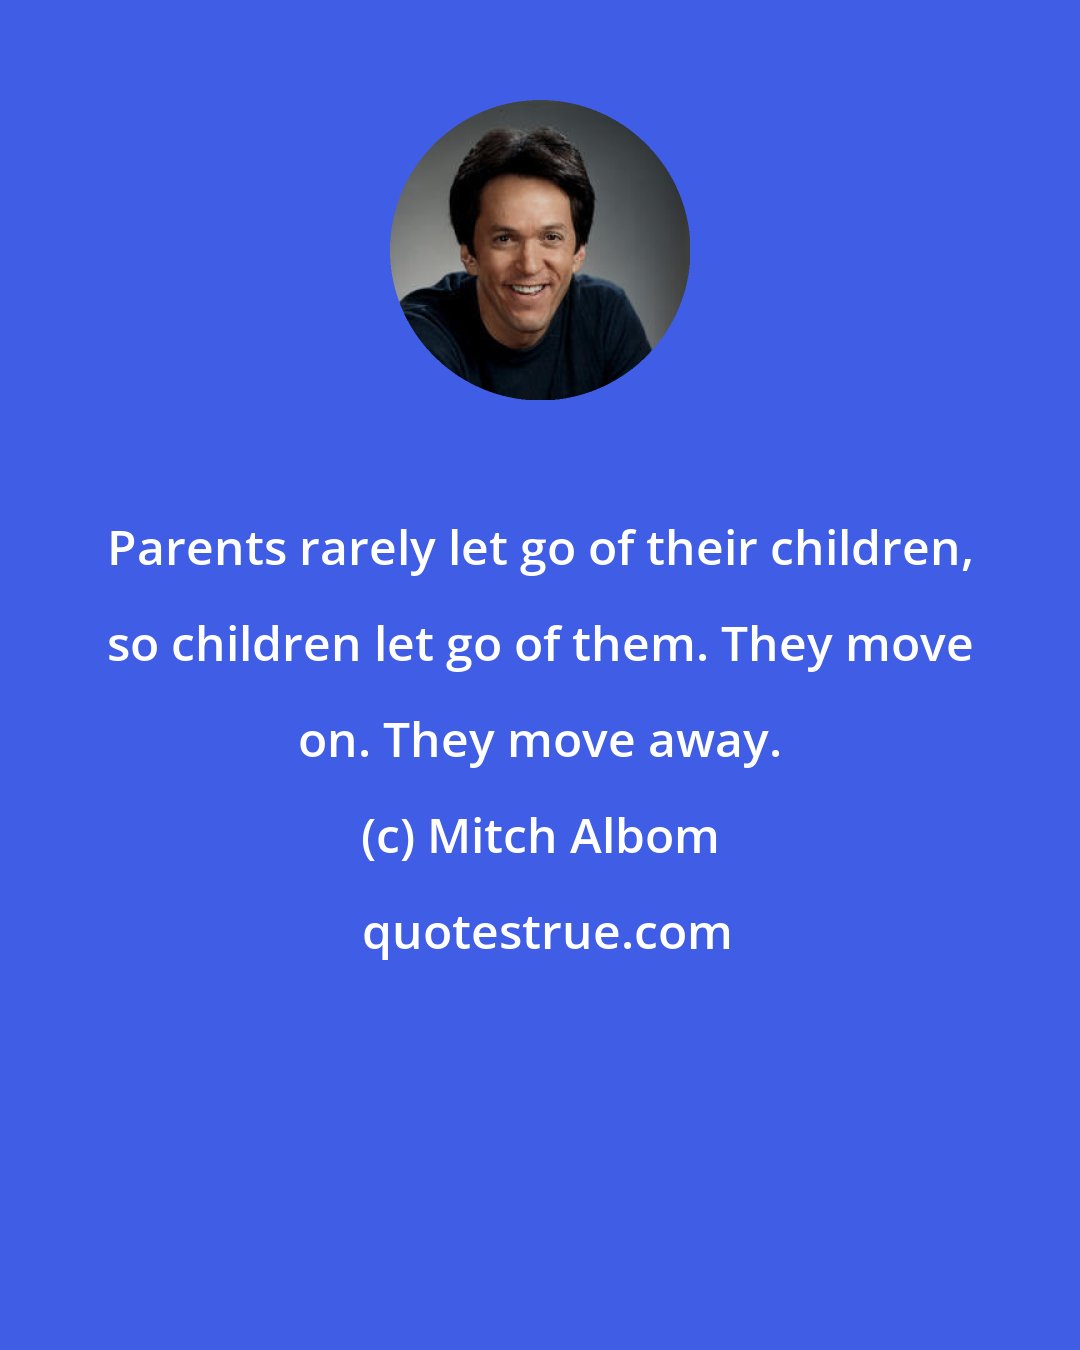 Mitch Albom: Parents rarely let go of their children, so children let go of them. They move on. They move away.